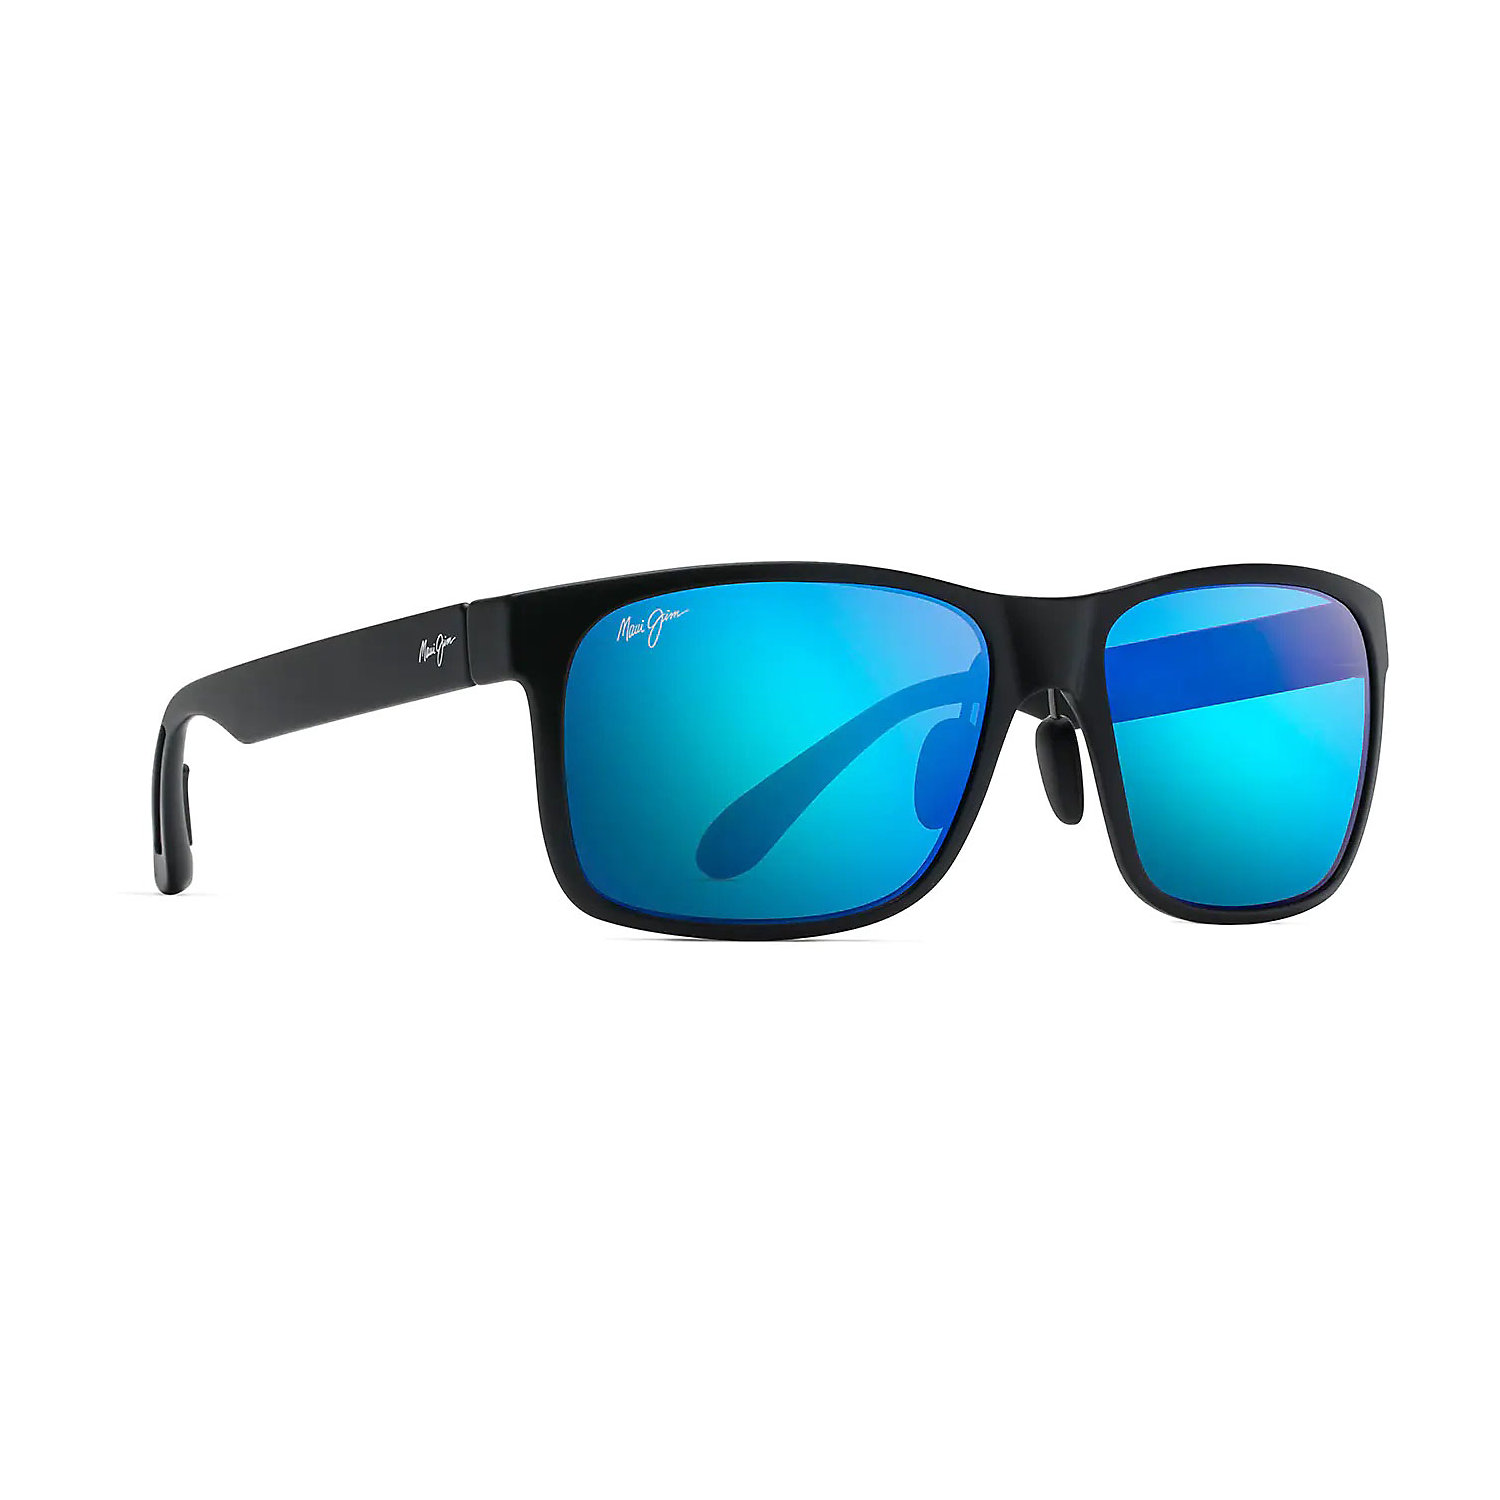 Maui Jim Red Sands Polarized Sunglasses - Asian Fit